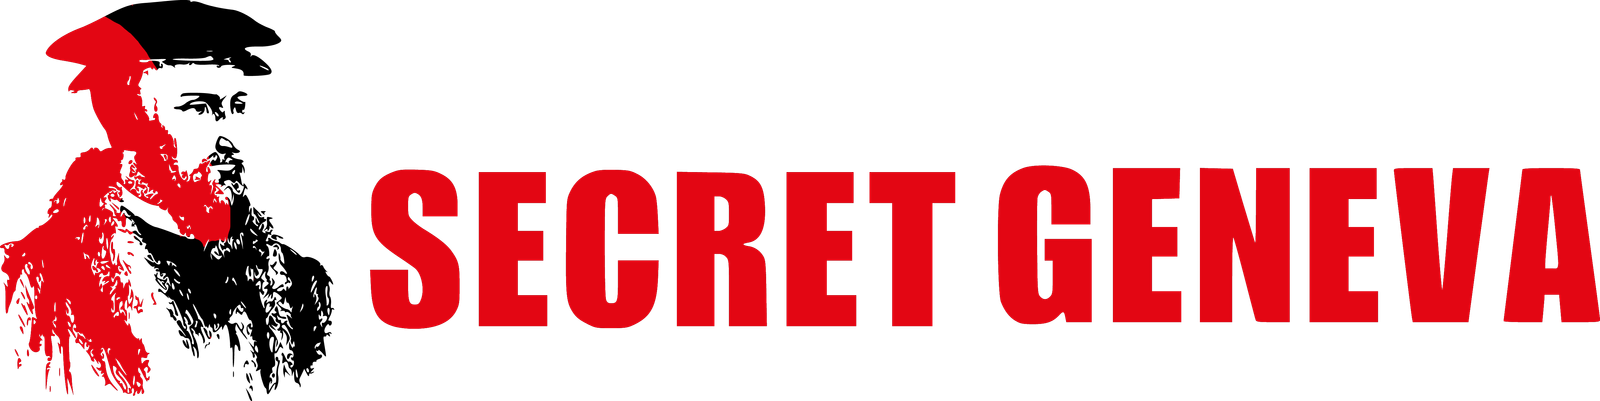 Secret Geneva Logo